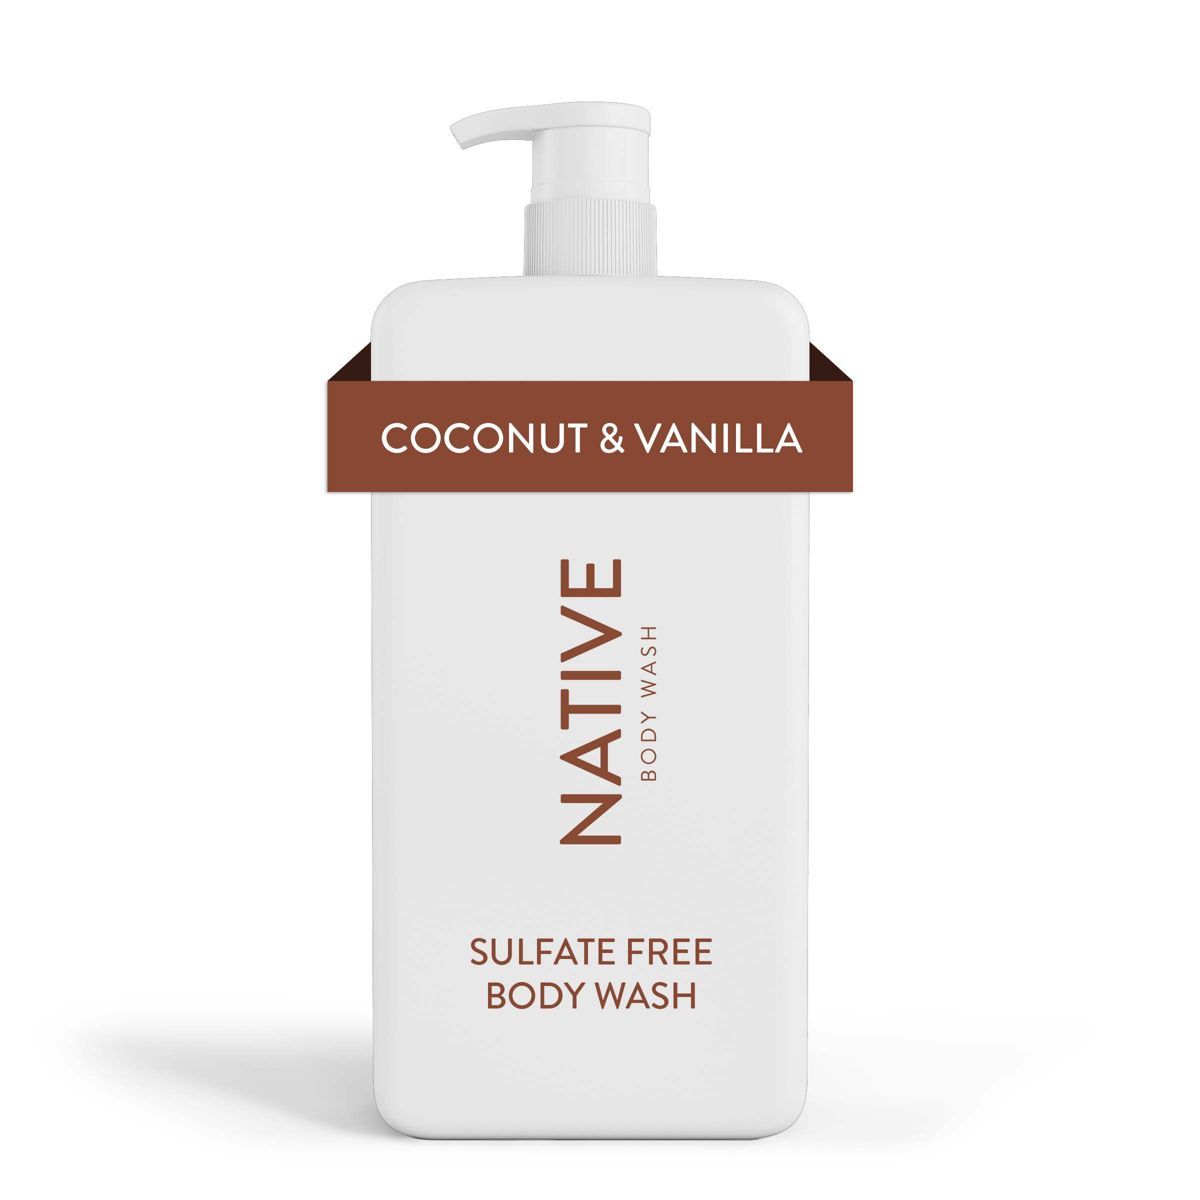 Native Body Wash with Pump - Coconut & Vanilla - Sulfate Free - 36 fl oz | Target